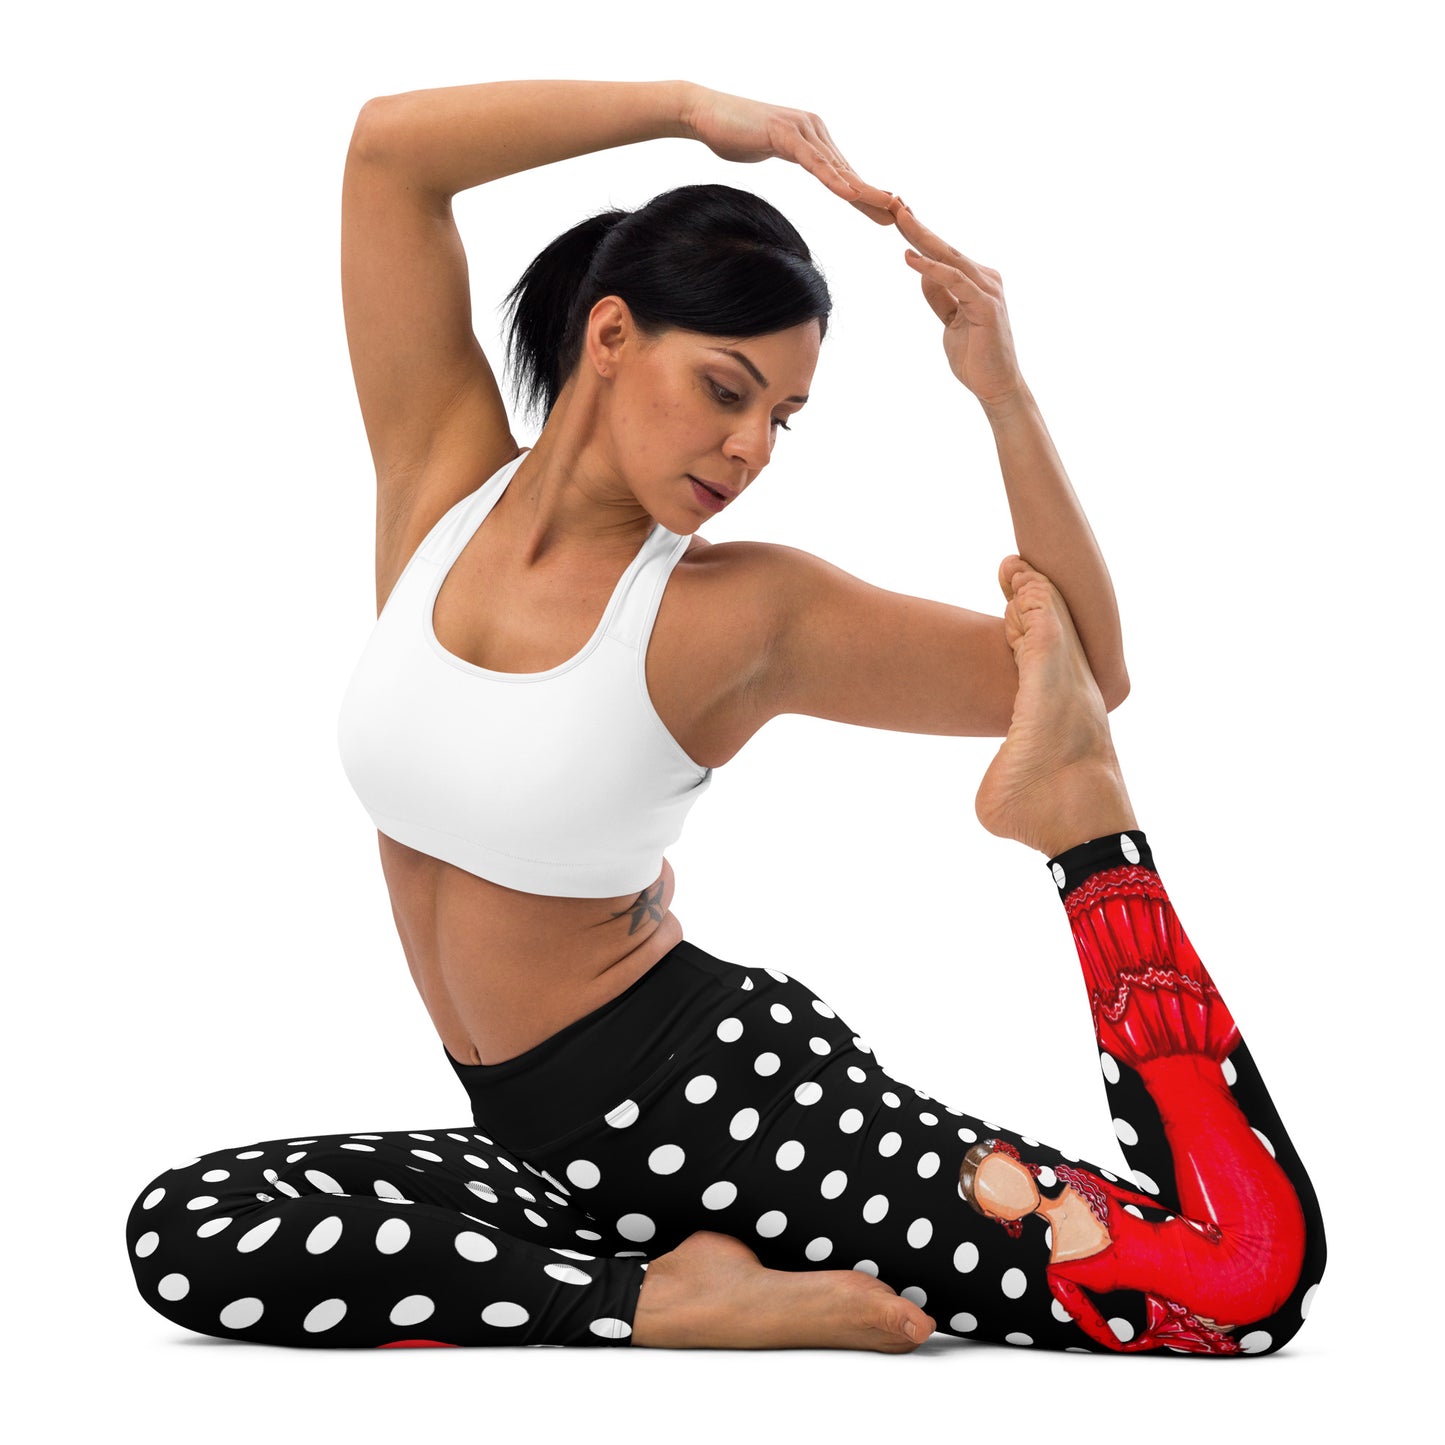 Flamenco Dancer Leggings, black with white polka dots high waisted yoga leggings with a red dress design - IllustrArte